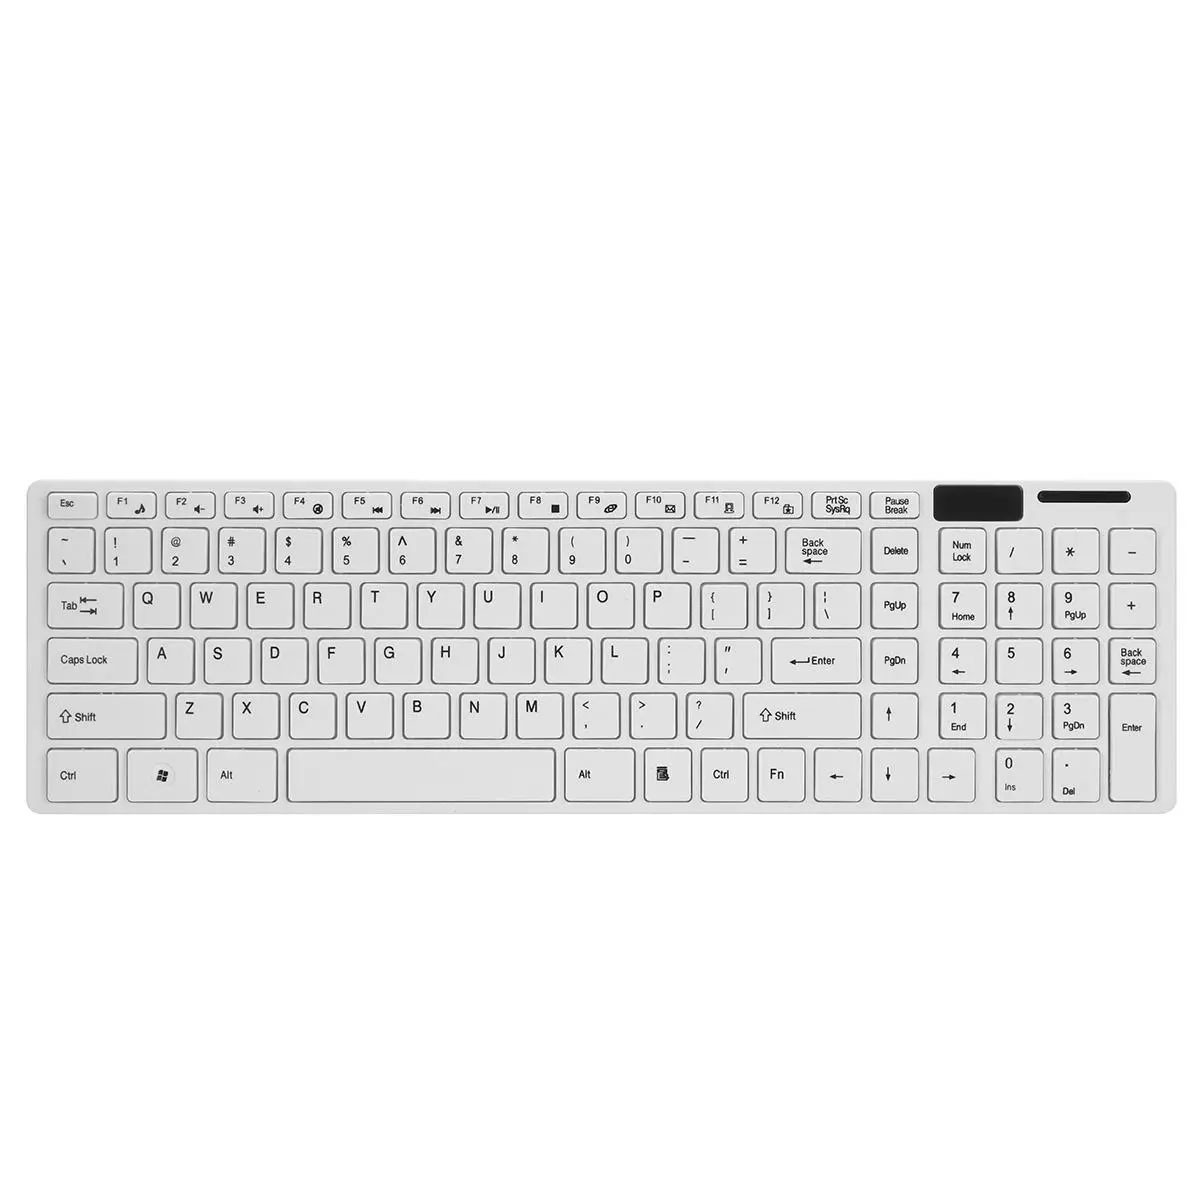 HF-KM06: 2.4G Wireless Ultrathin Technology Oiffce Keyboard and 1000DPI Wireless Mouse Combo for PC Laptop - White